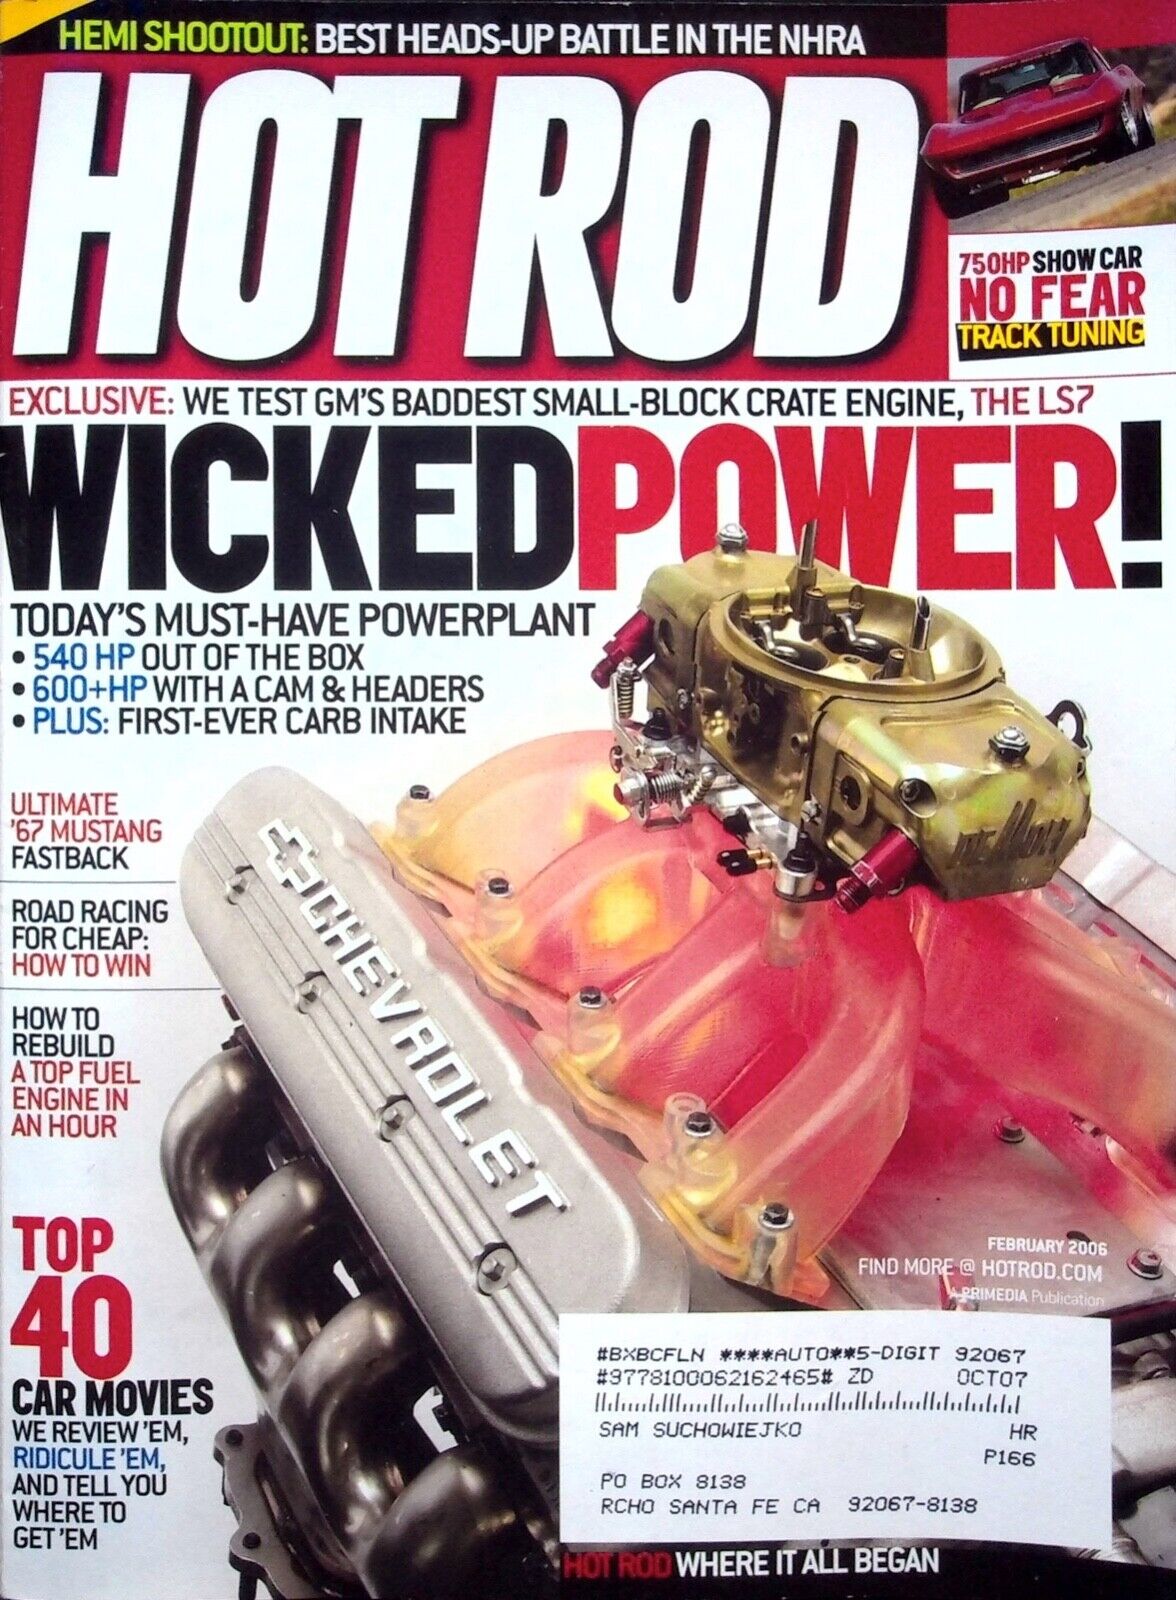 WICKED POWER - HOT ROD MAGAZINE, FEBRUARY 2006